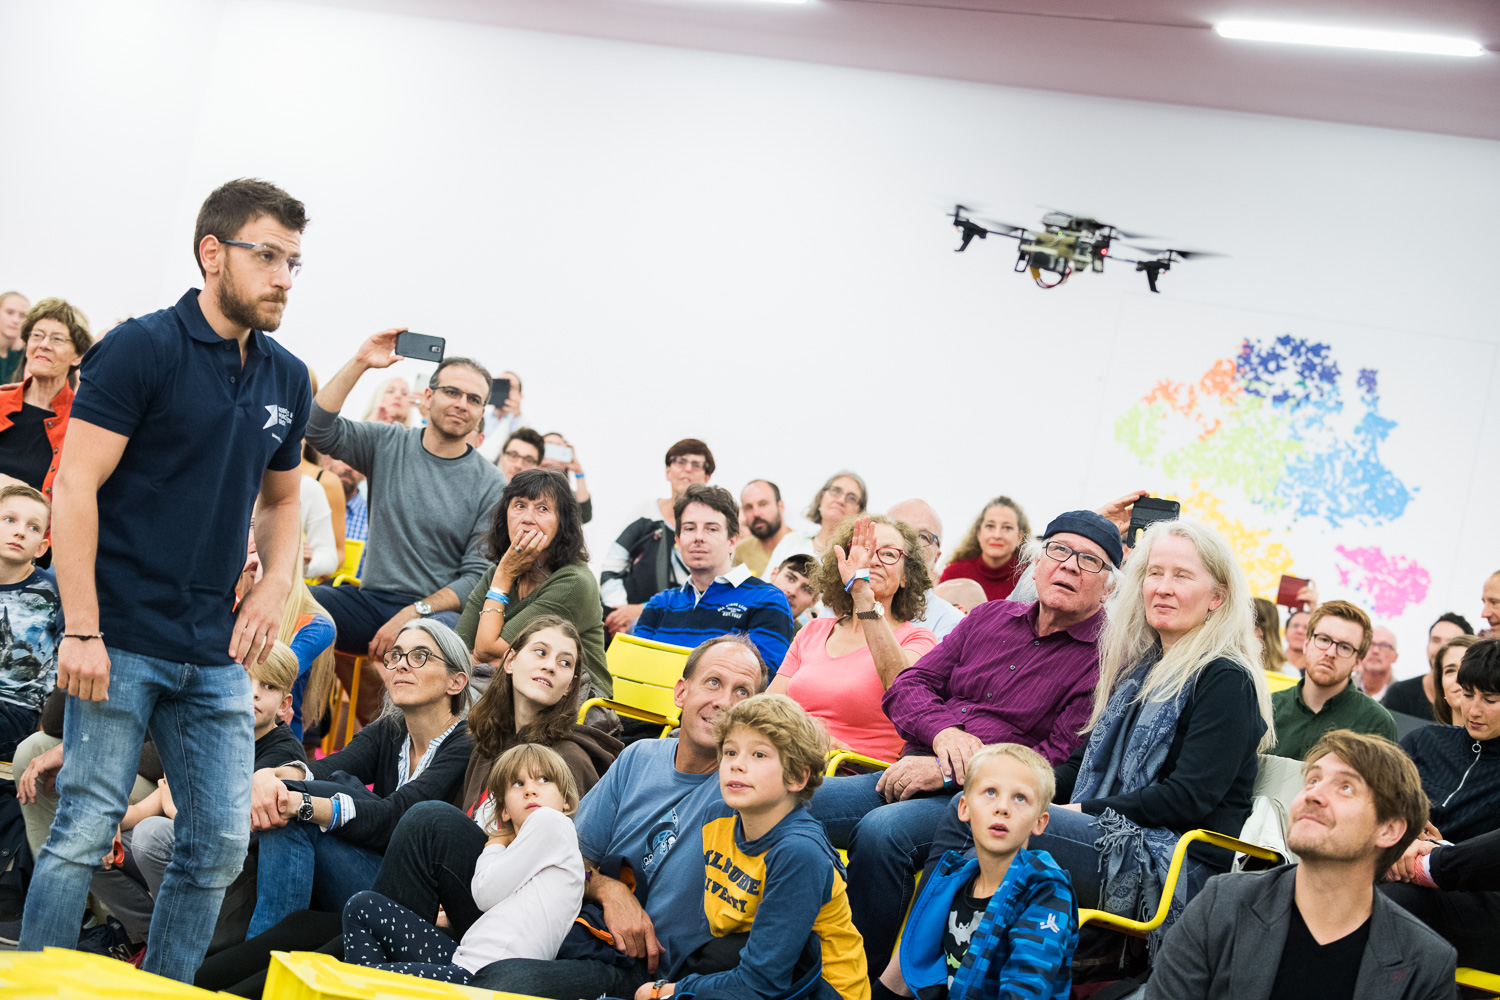 Drones to the rescue! Davide Falanga, doctoral candidate under robotics professor Davide Scaramuzza, captivates the audience with a demonstration of how drones autonomously navigate a room. (Image: Frank Brüderli)